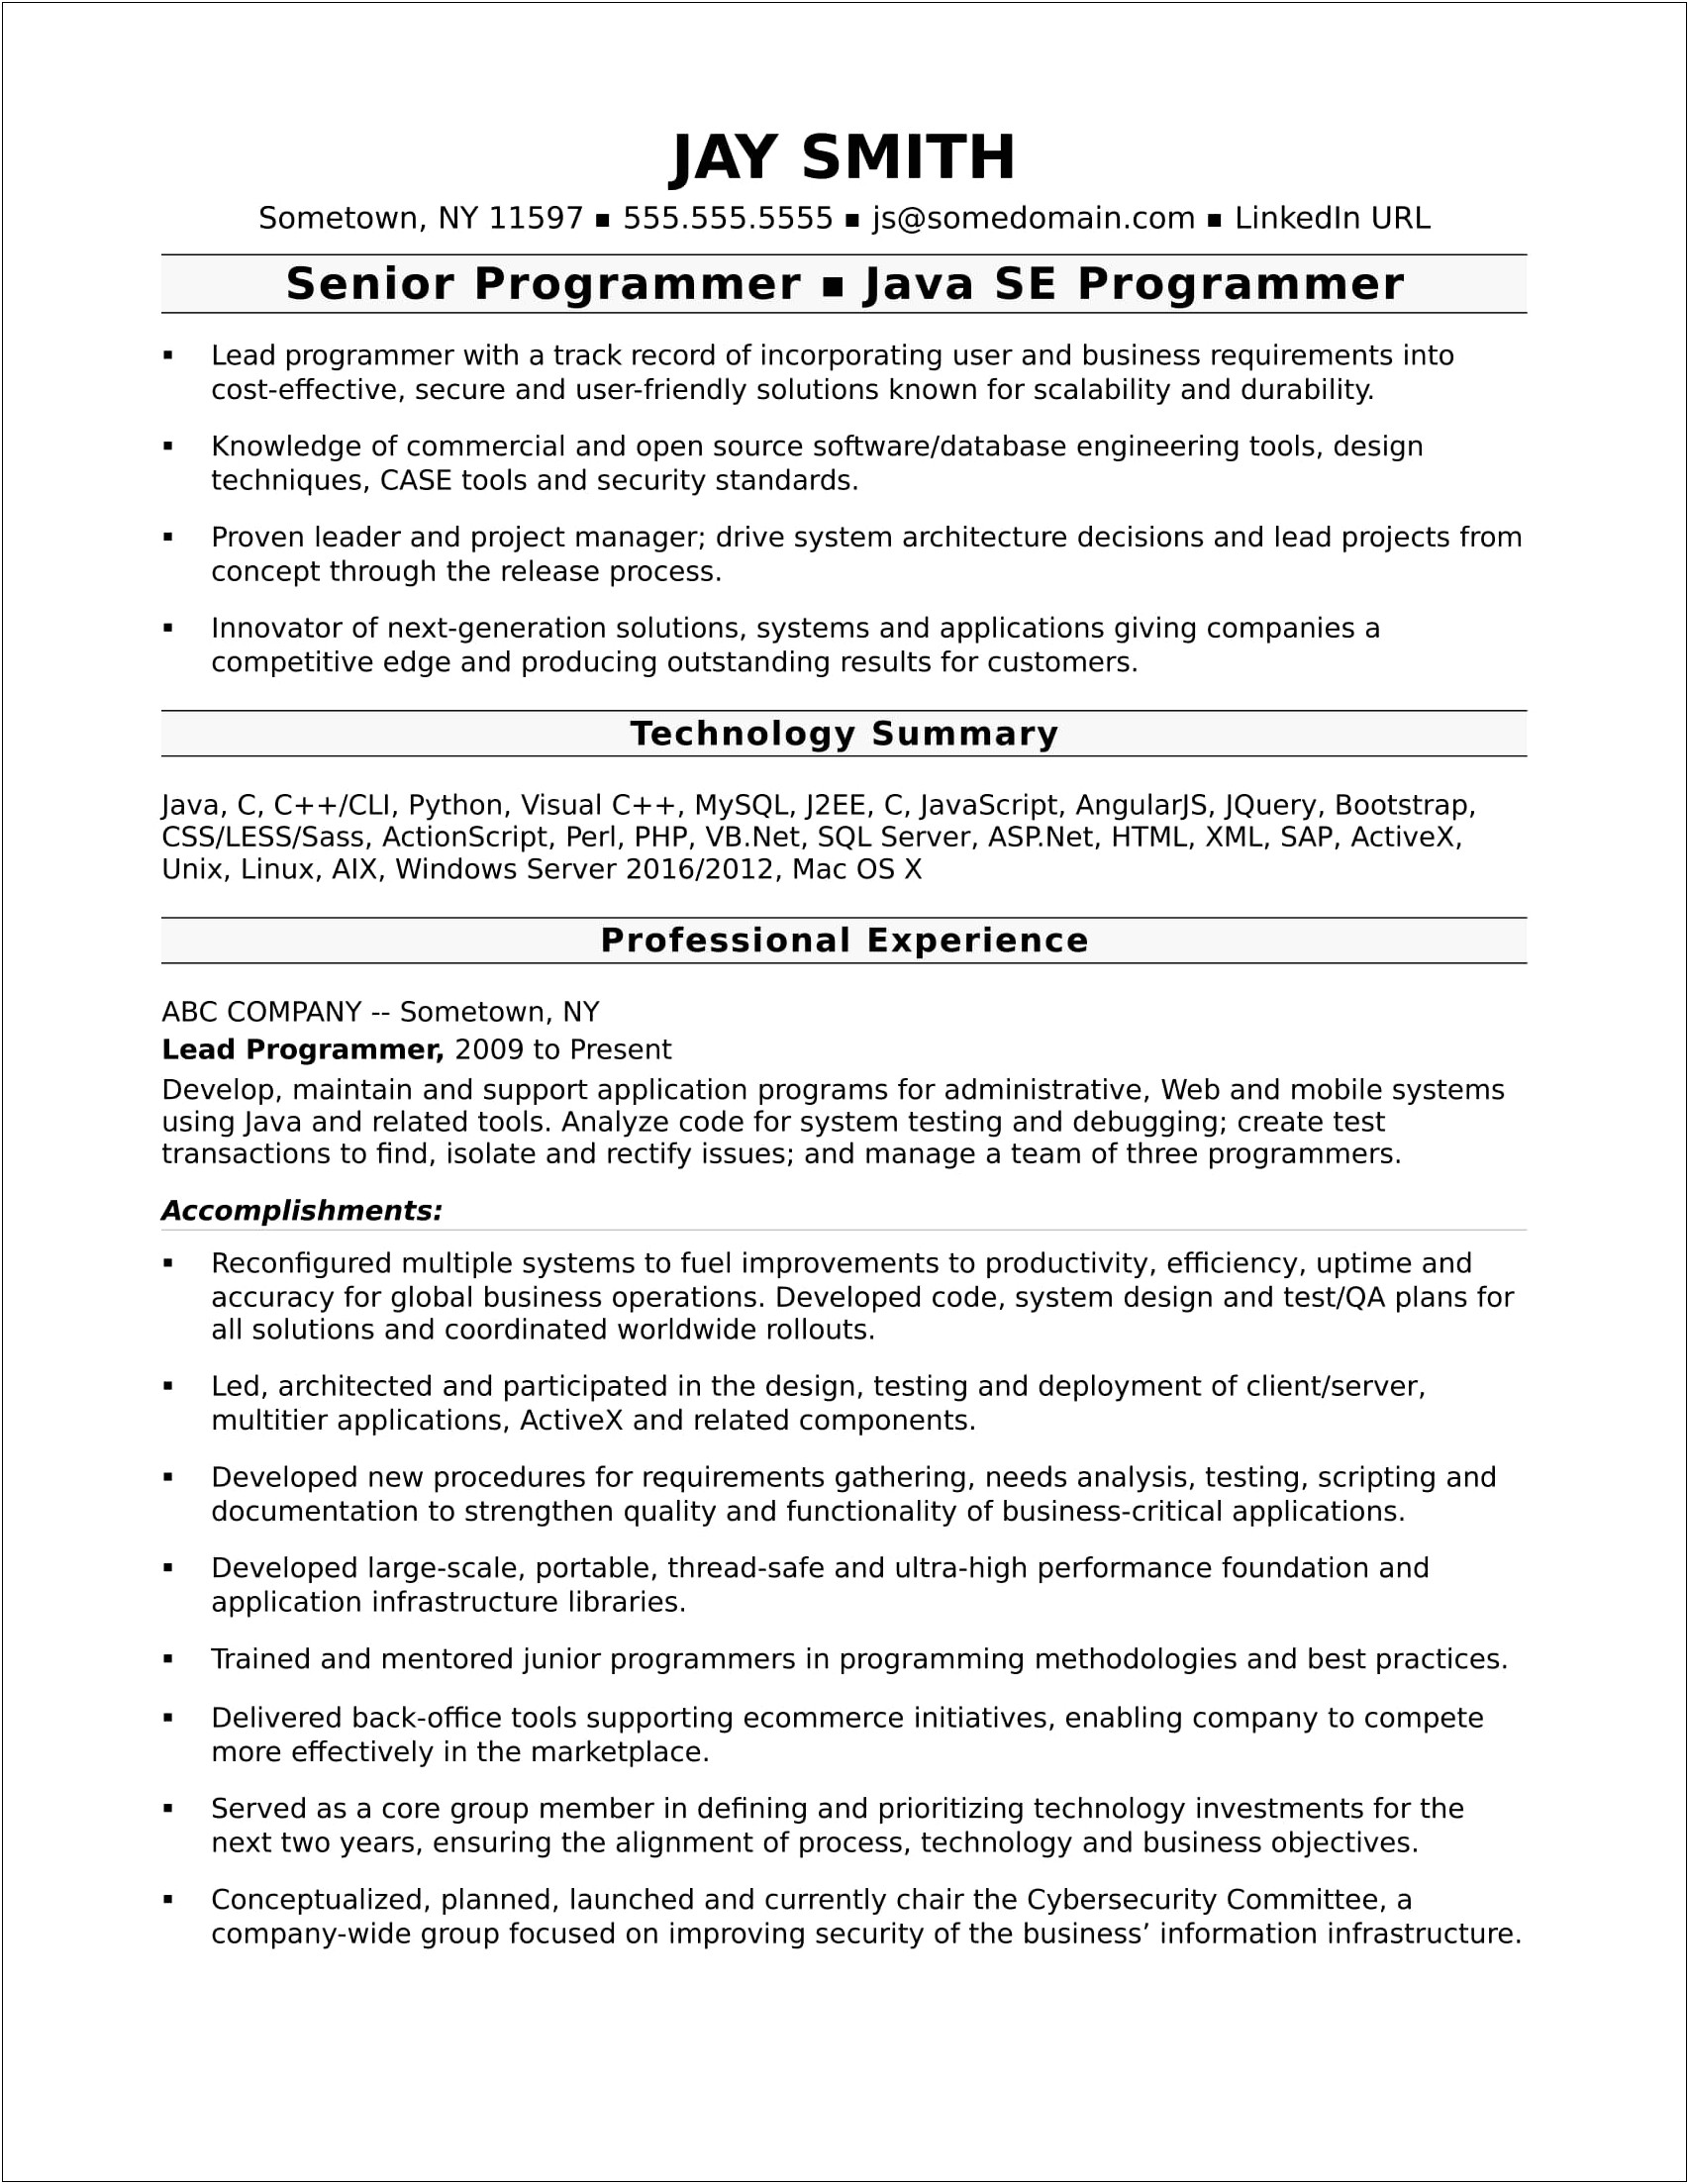 Sample Resume For Developer Experienced In Usa